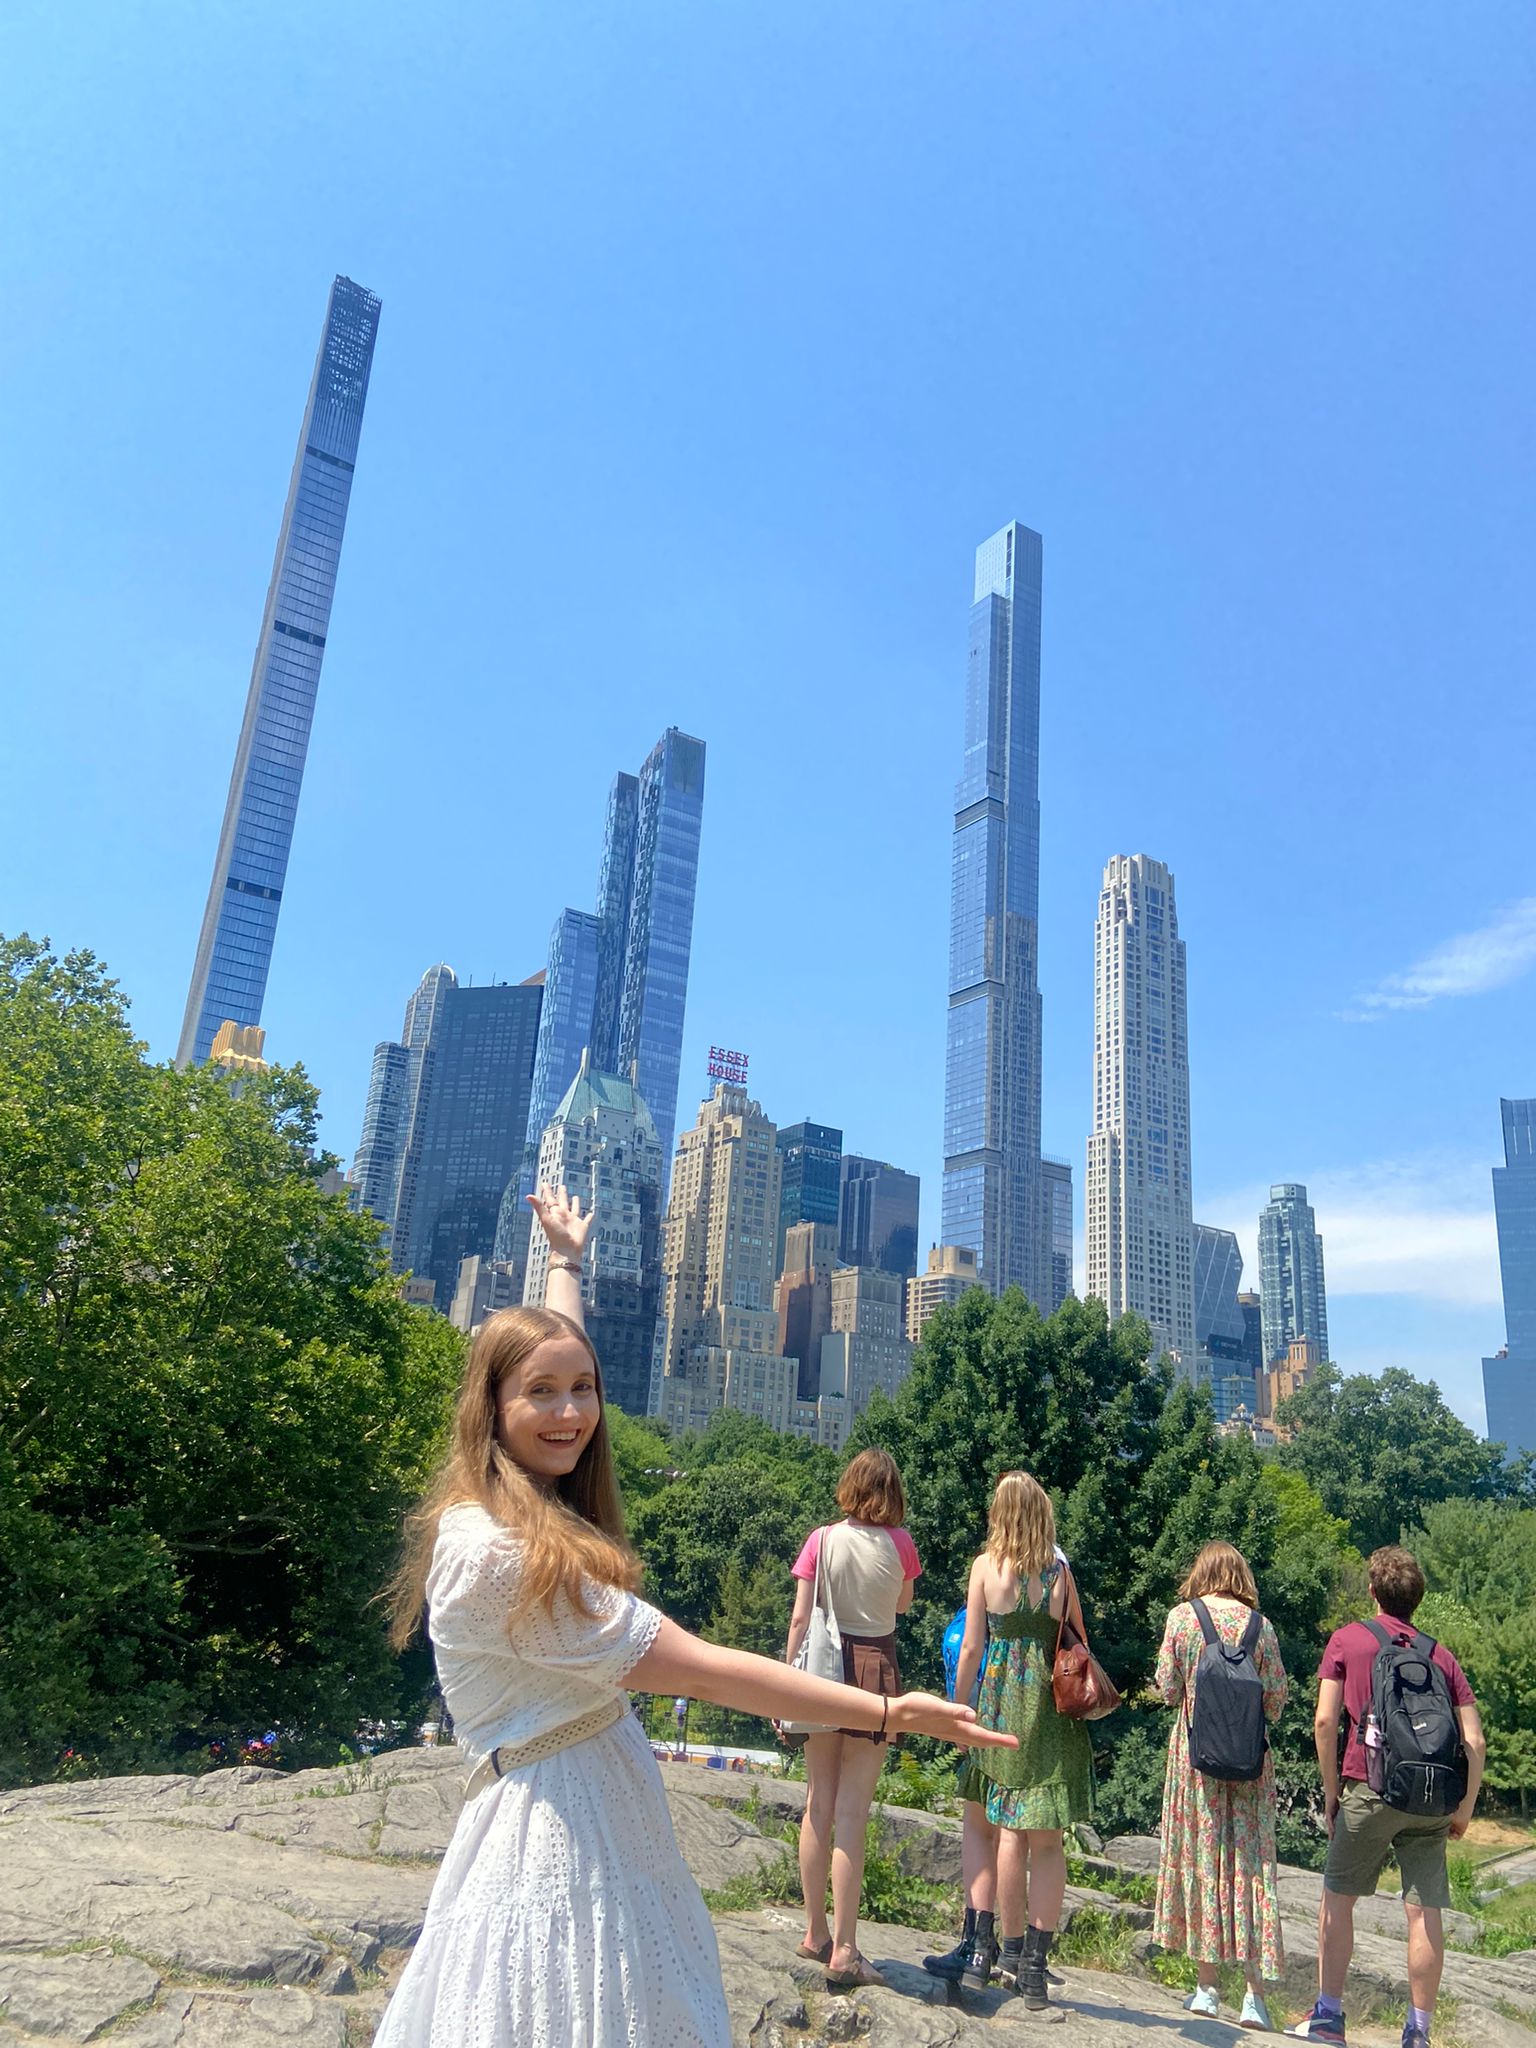 Emily gesturing towards a New York skyline